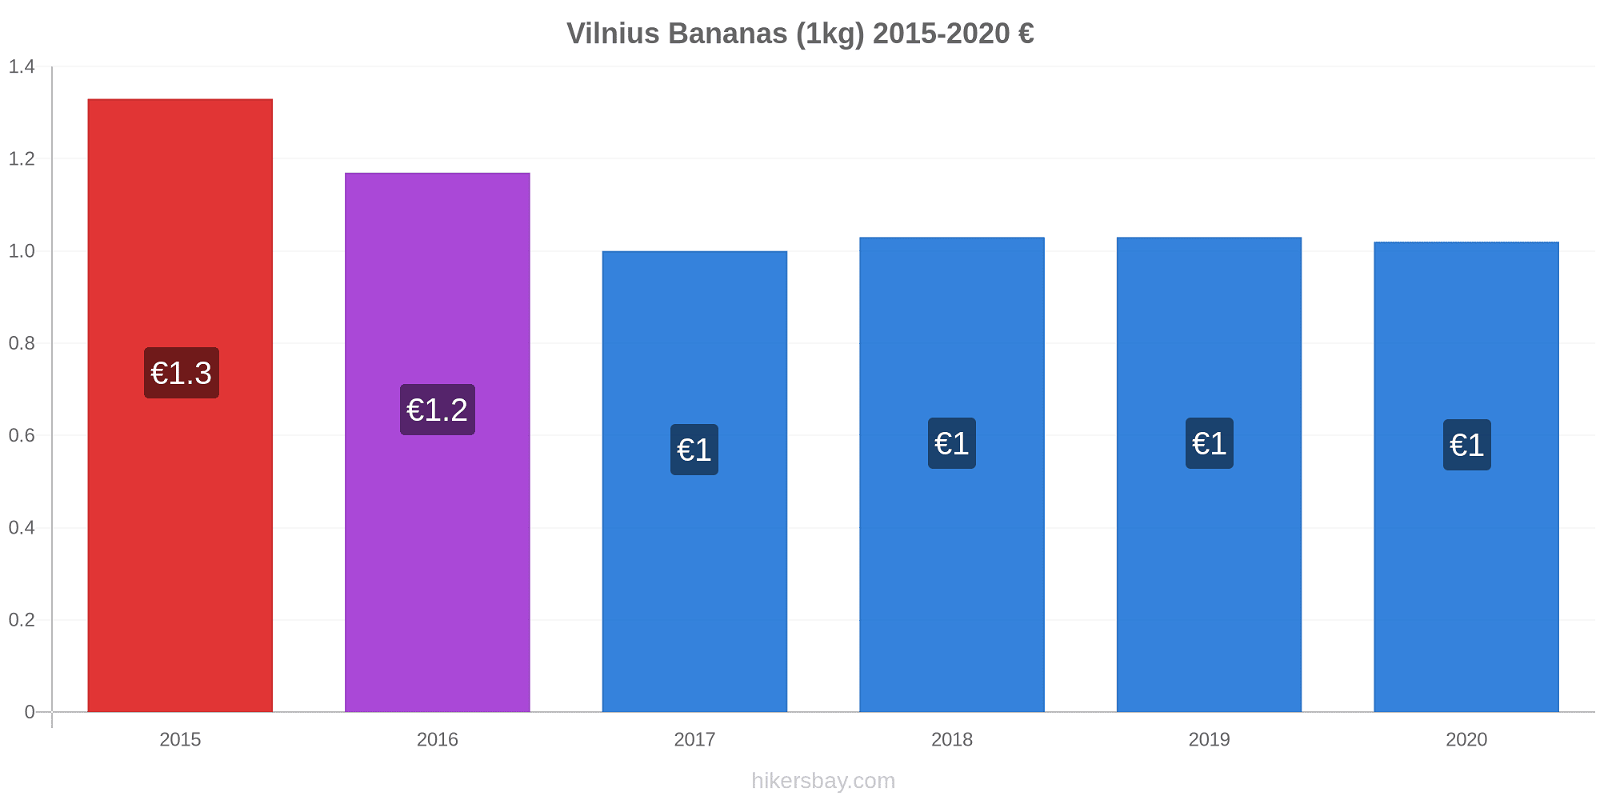 Vilnius price changes Bananas (1kg) hikersbay.com